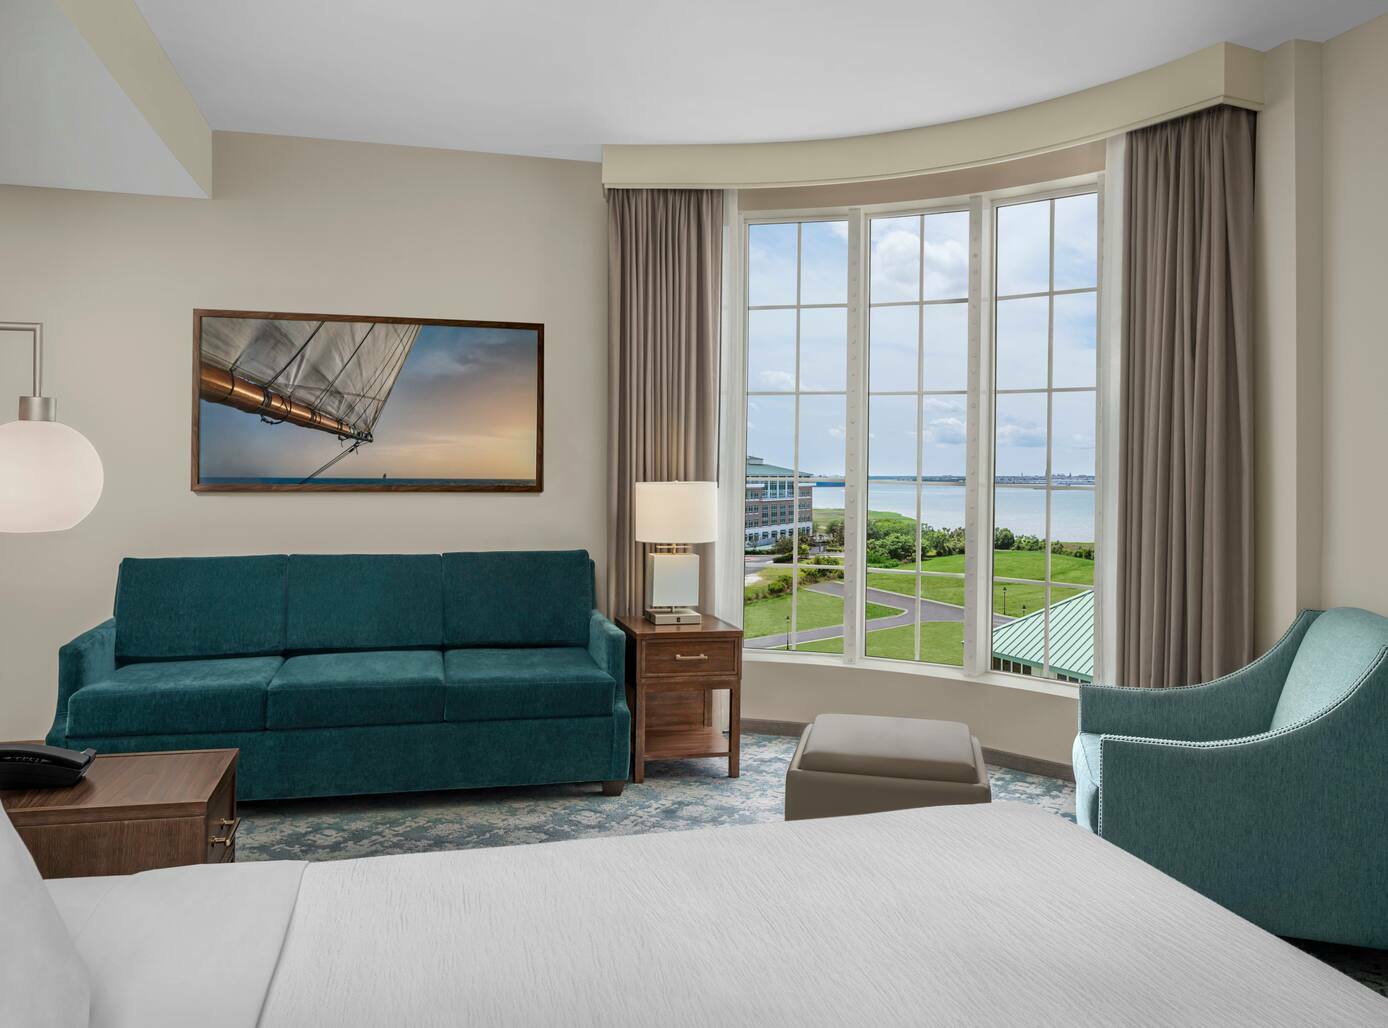 Photo of Embassy Suites by Hilton Charleston Harbor Mt. Pleasant, Mt. Pleasant, SC